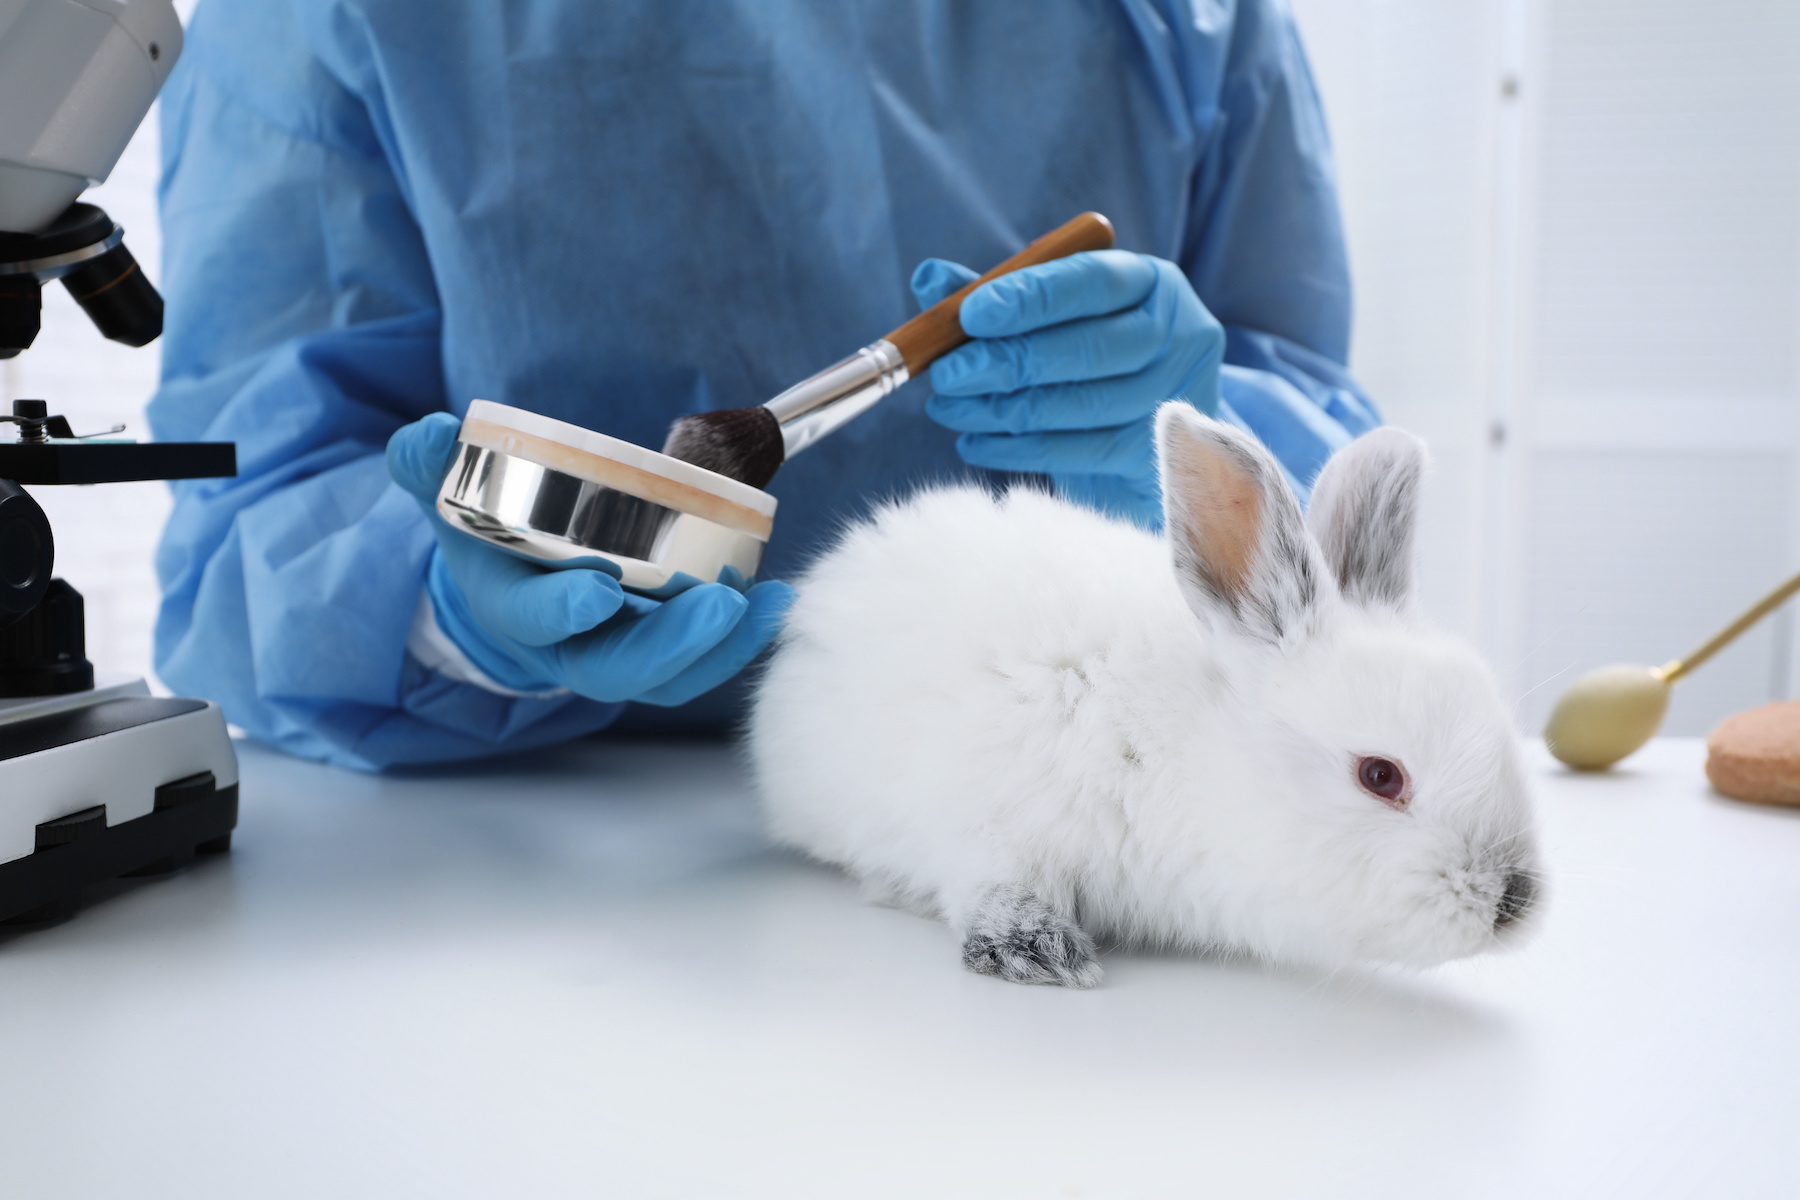 Scientist applying makeup to rabbit animal subject